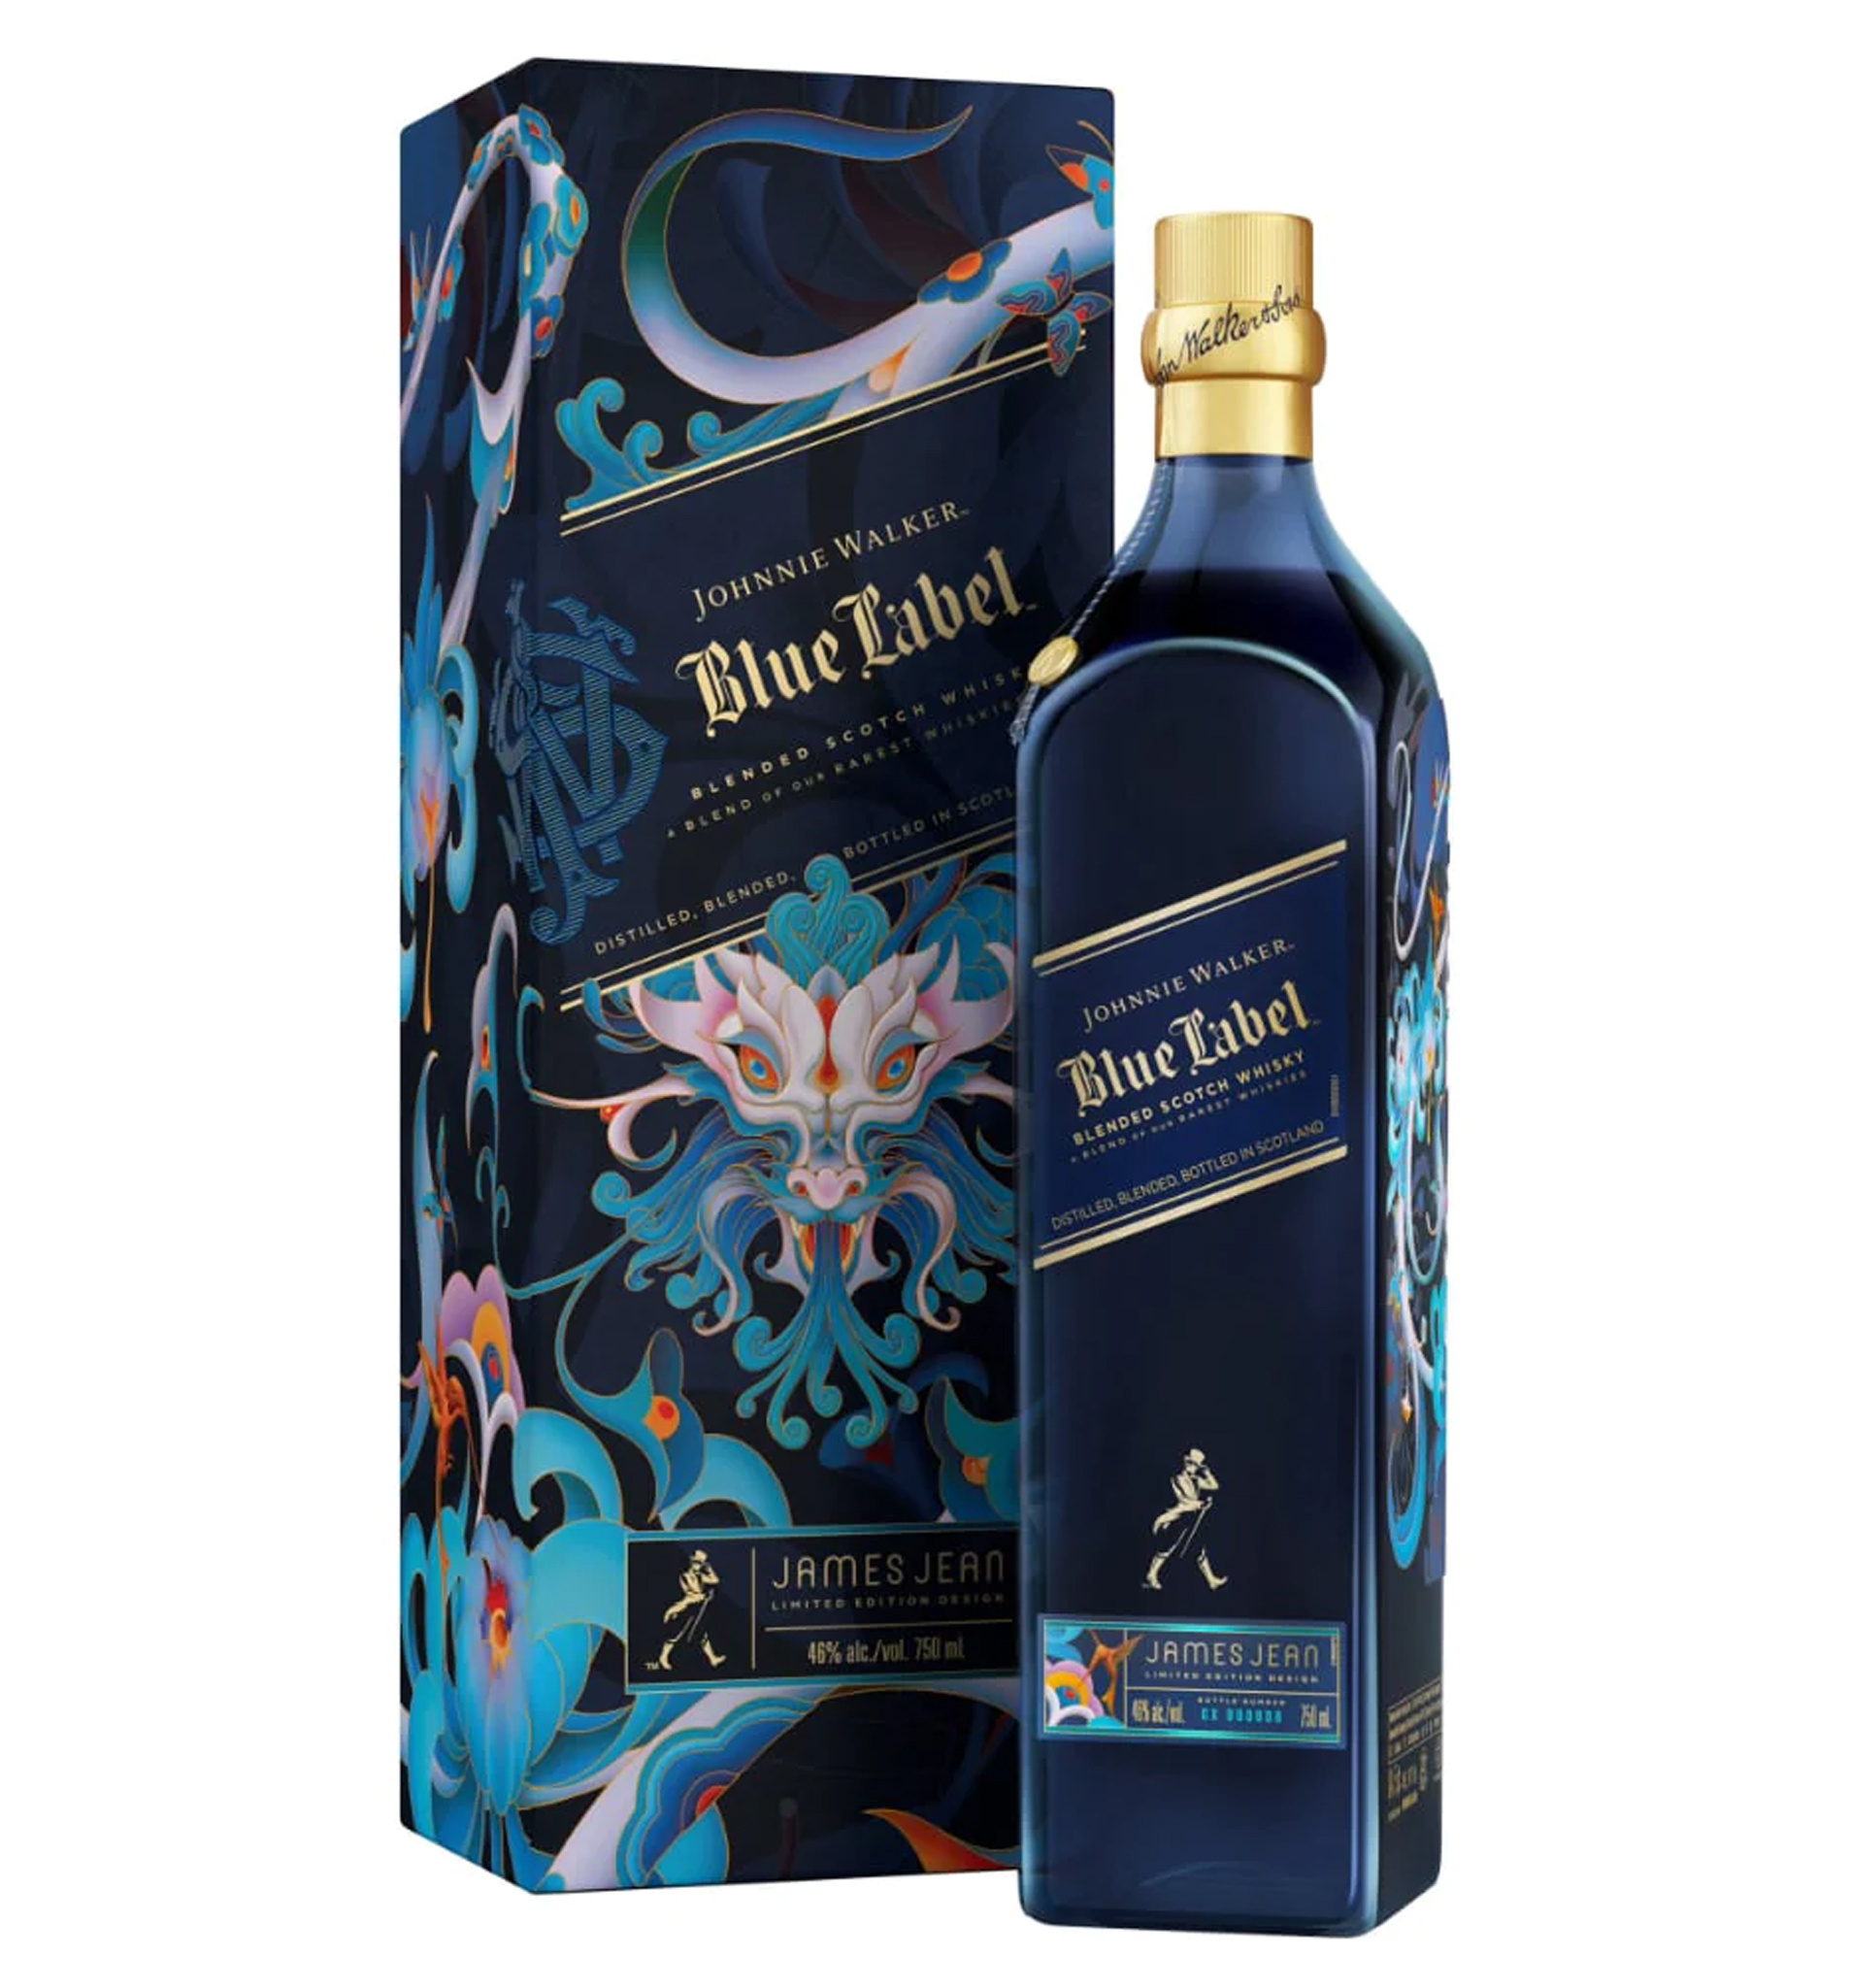 Johnnie Walker Blue Label 750 ml - Blended Scotch Whisky